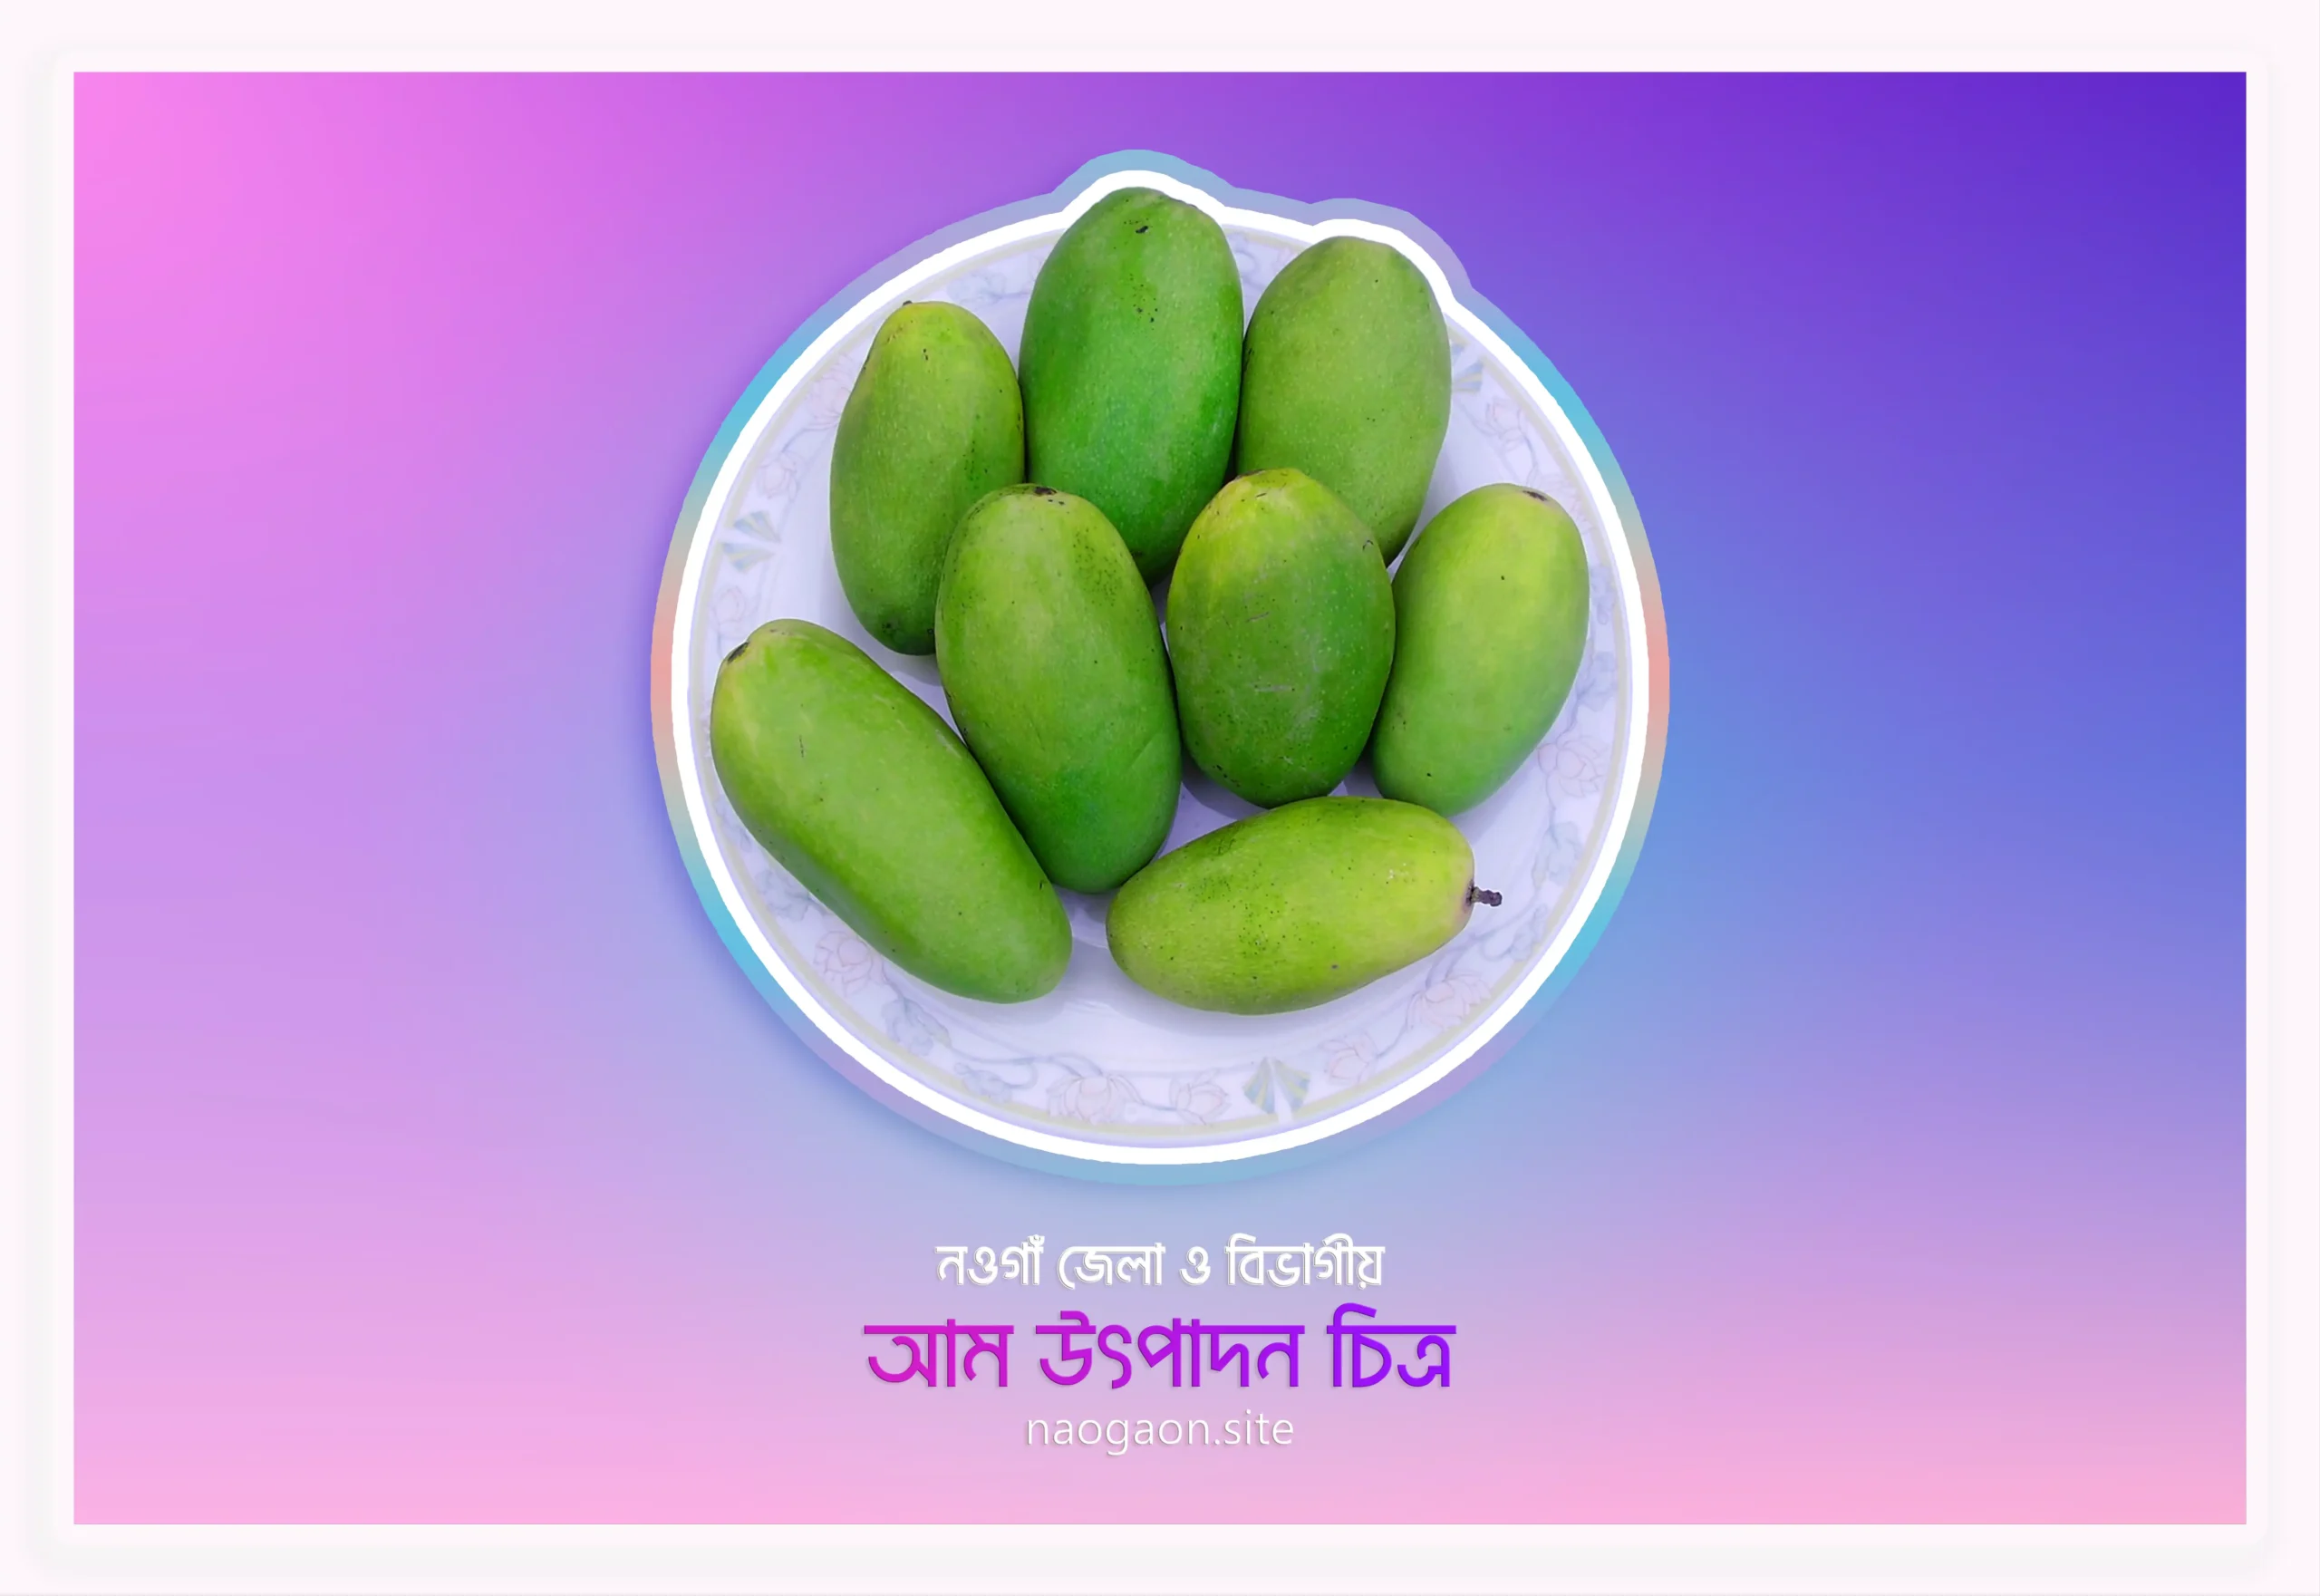 Mango Production Statistics - Naogaon & Rajshahi Division.